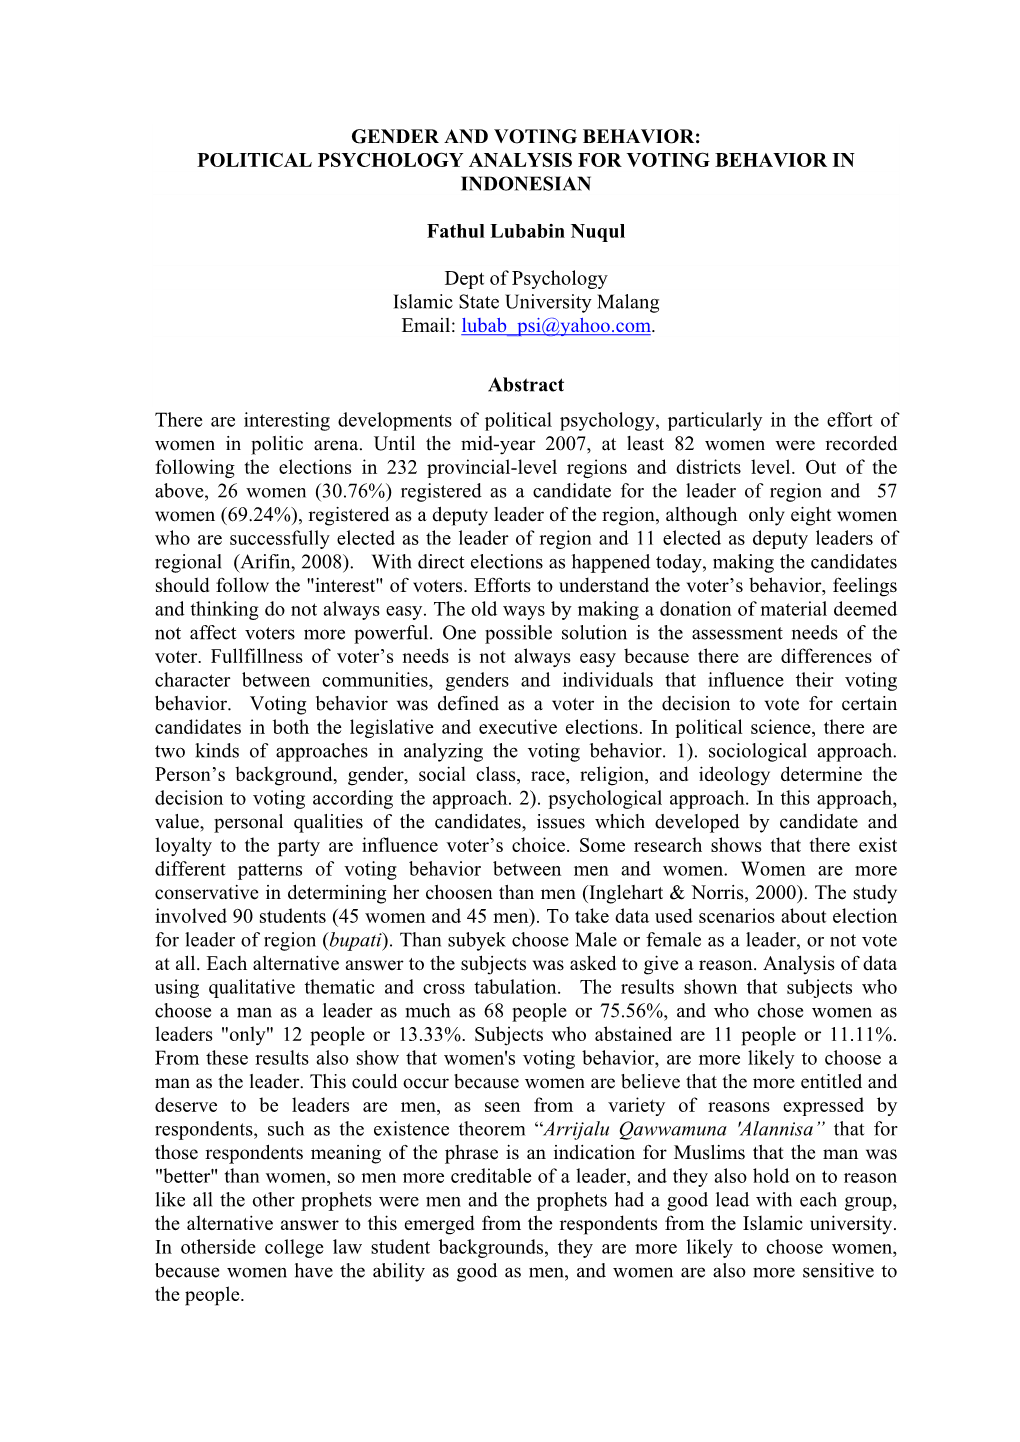 Gender and Voting Behavior: Political Psychology Analysis for Voting Behavior in Indonesian